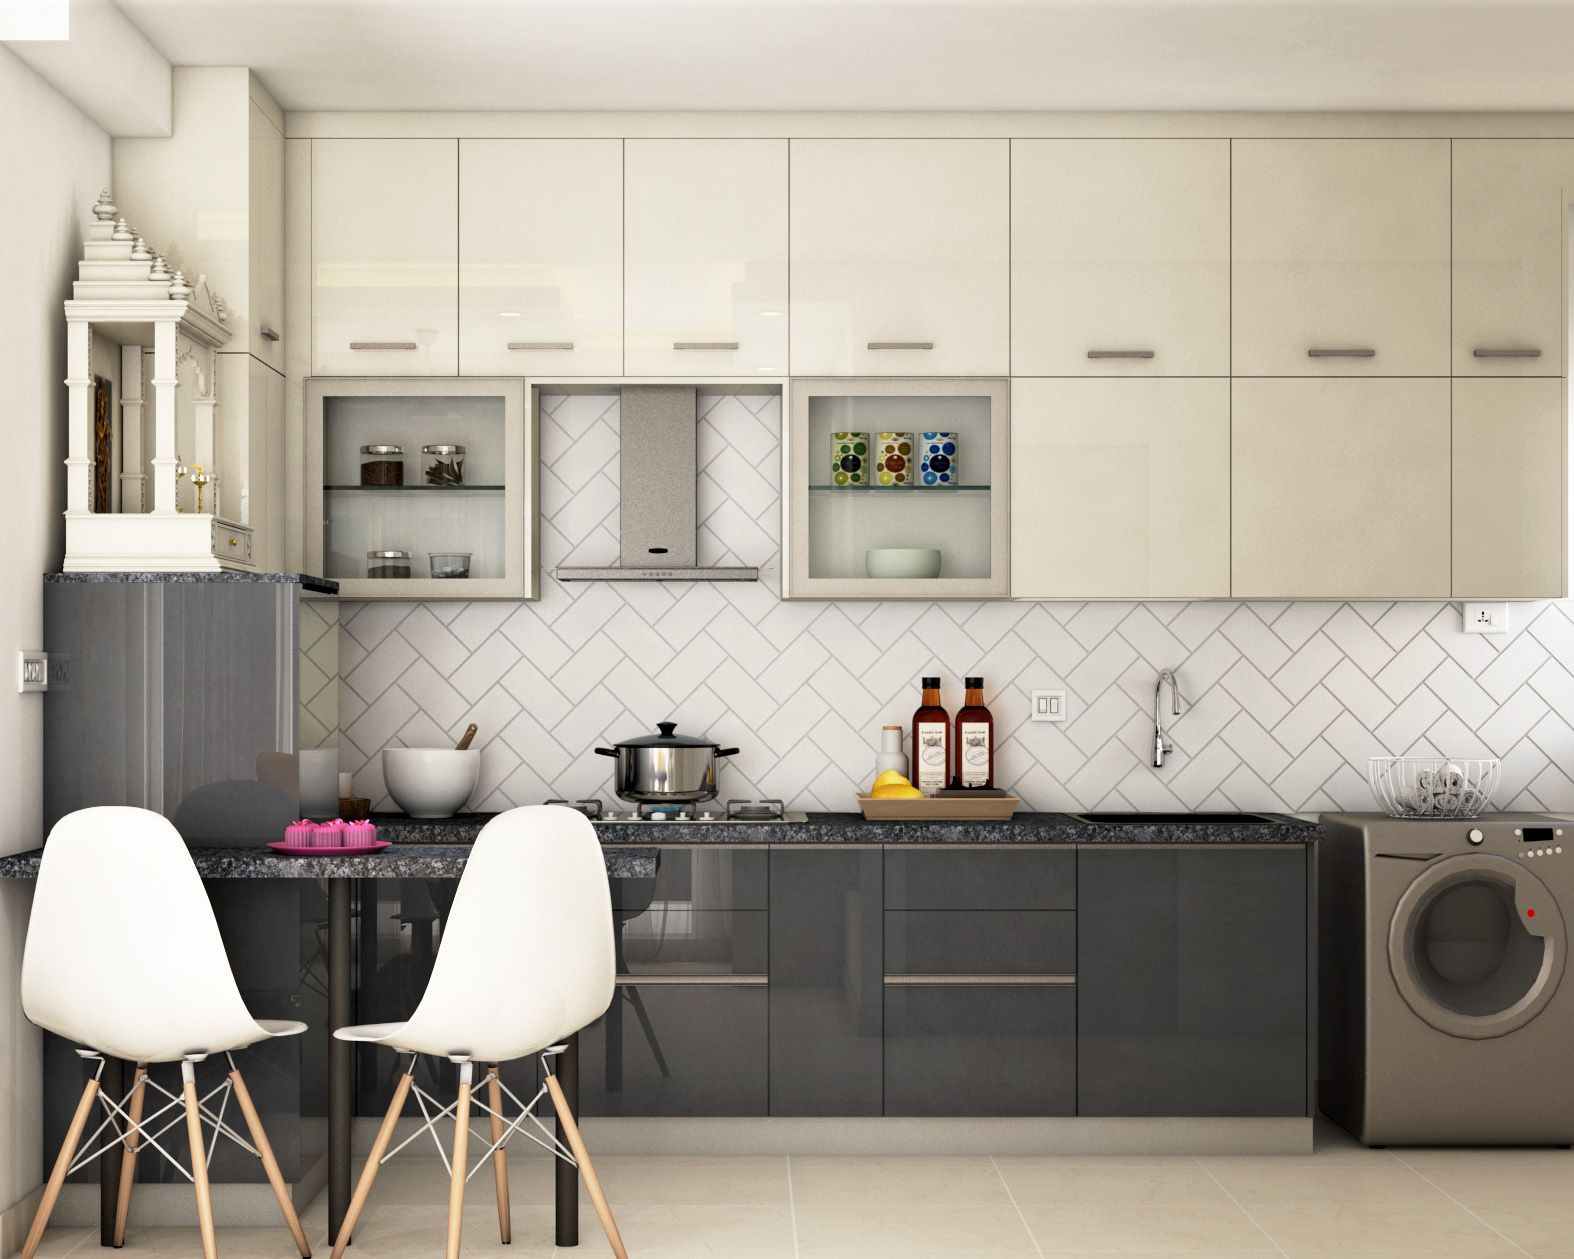 Modern White Ceramic Kitchen Tile Design With Herringbone Pattern